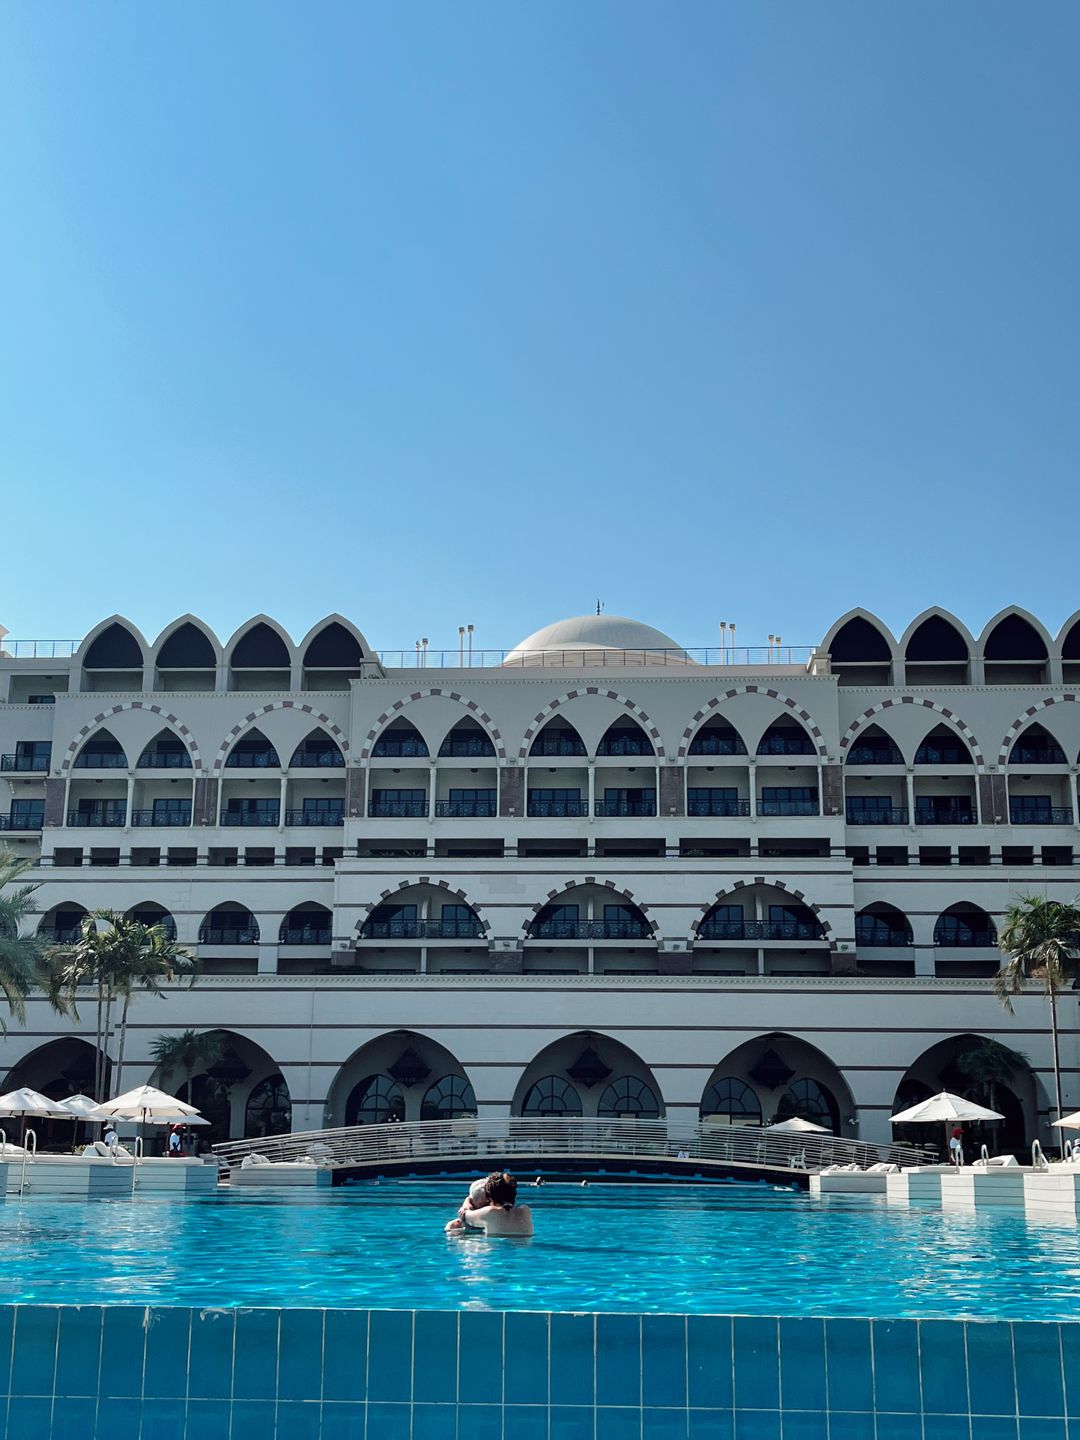 Jumeirah Zabeel Saray hotel's infinity pool